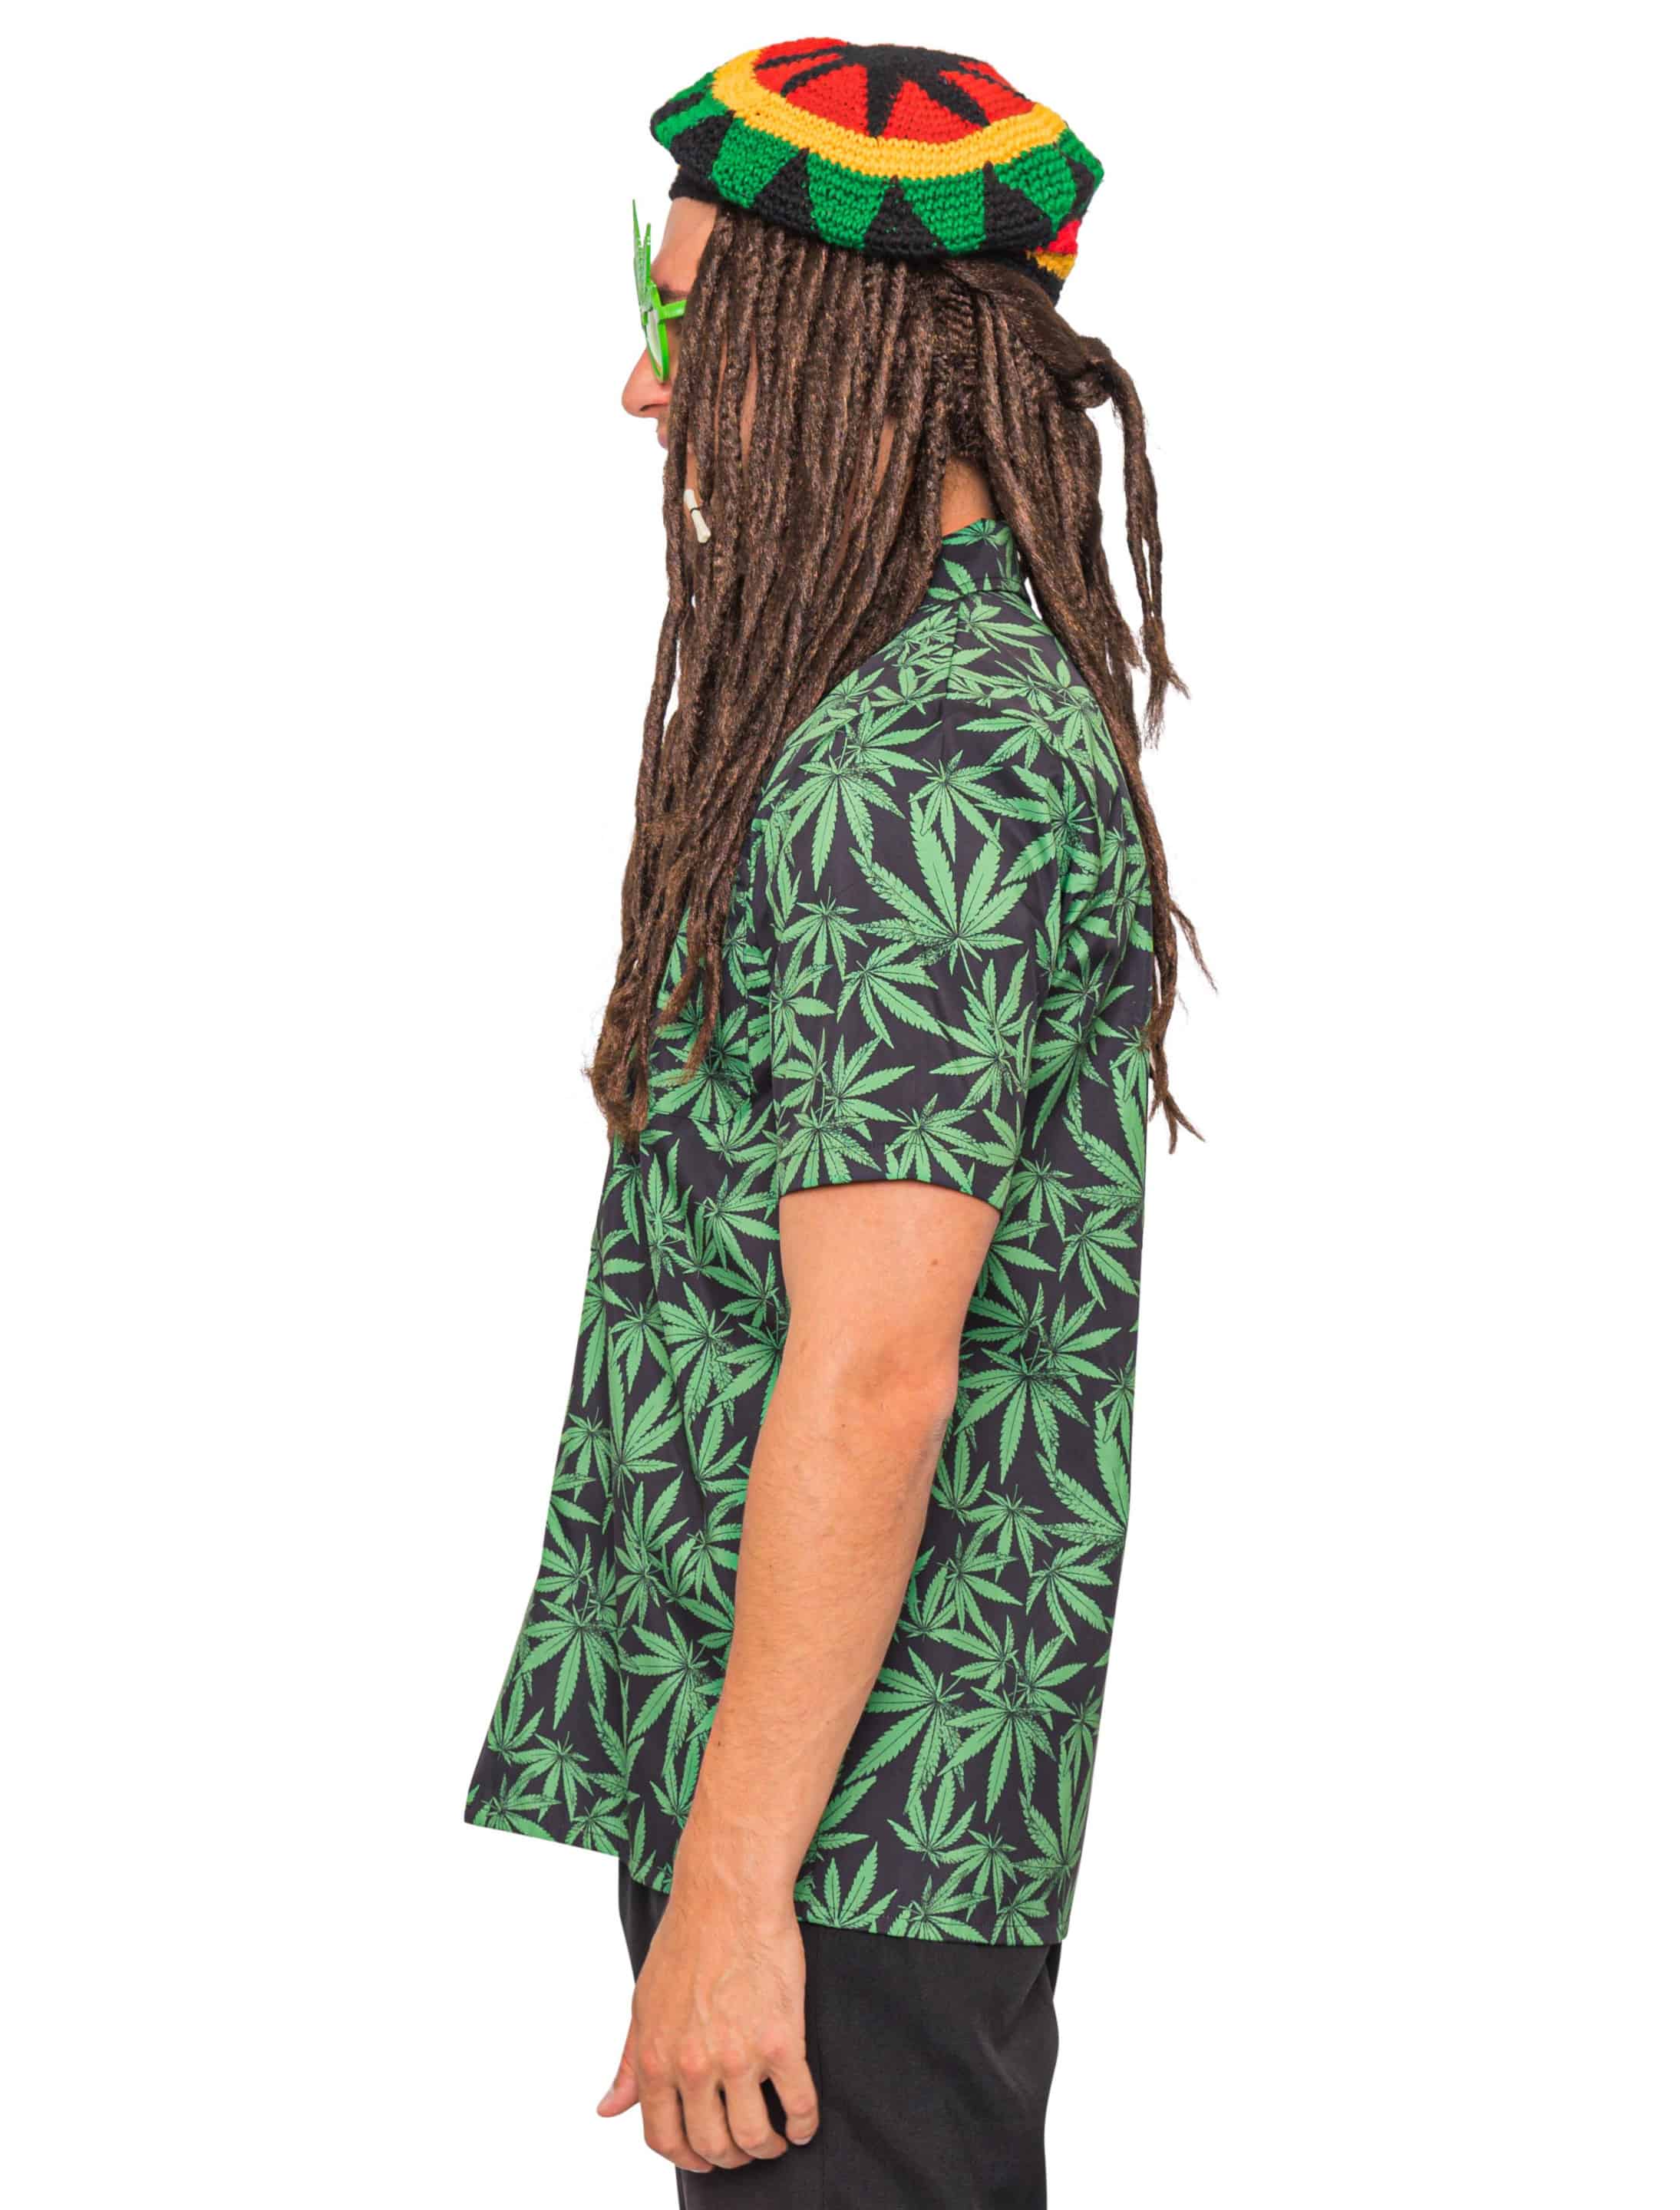 Hemd Cannabis Herren grün M